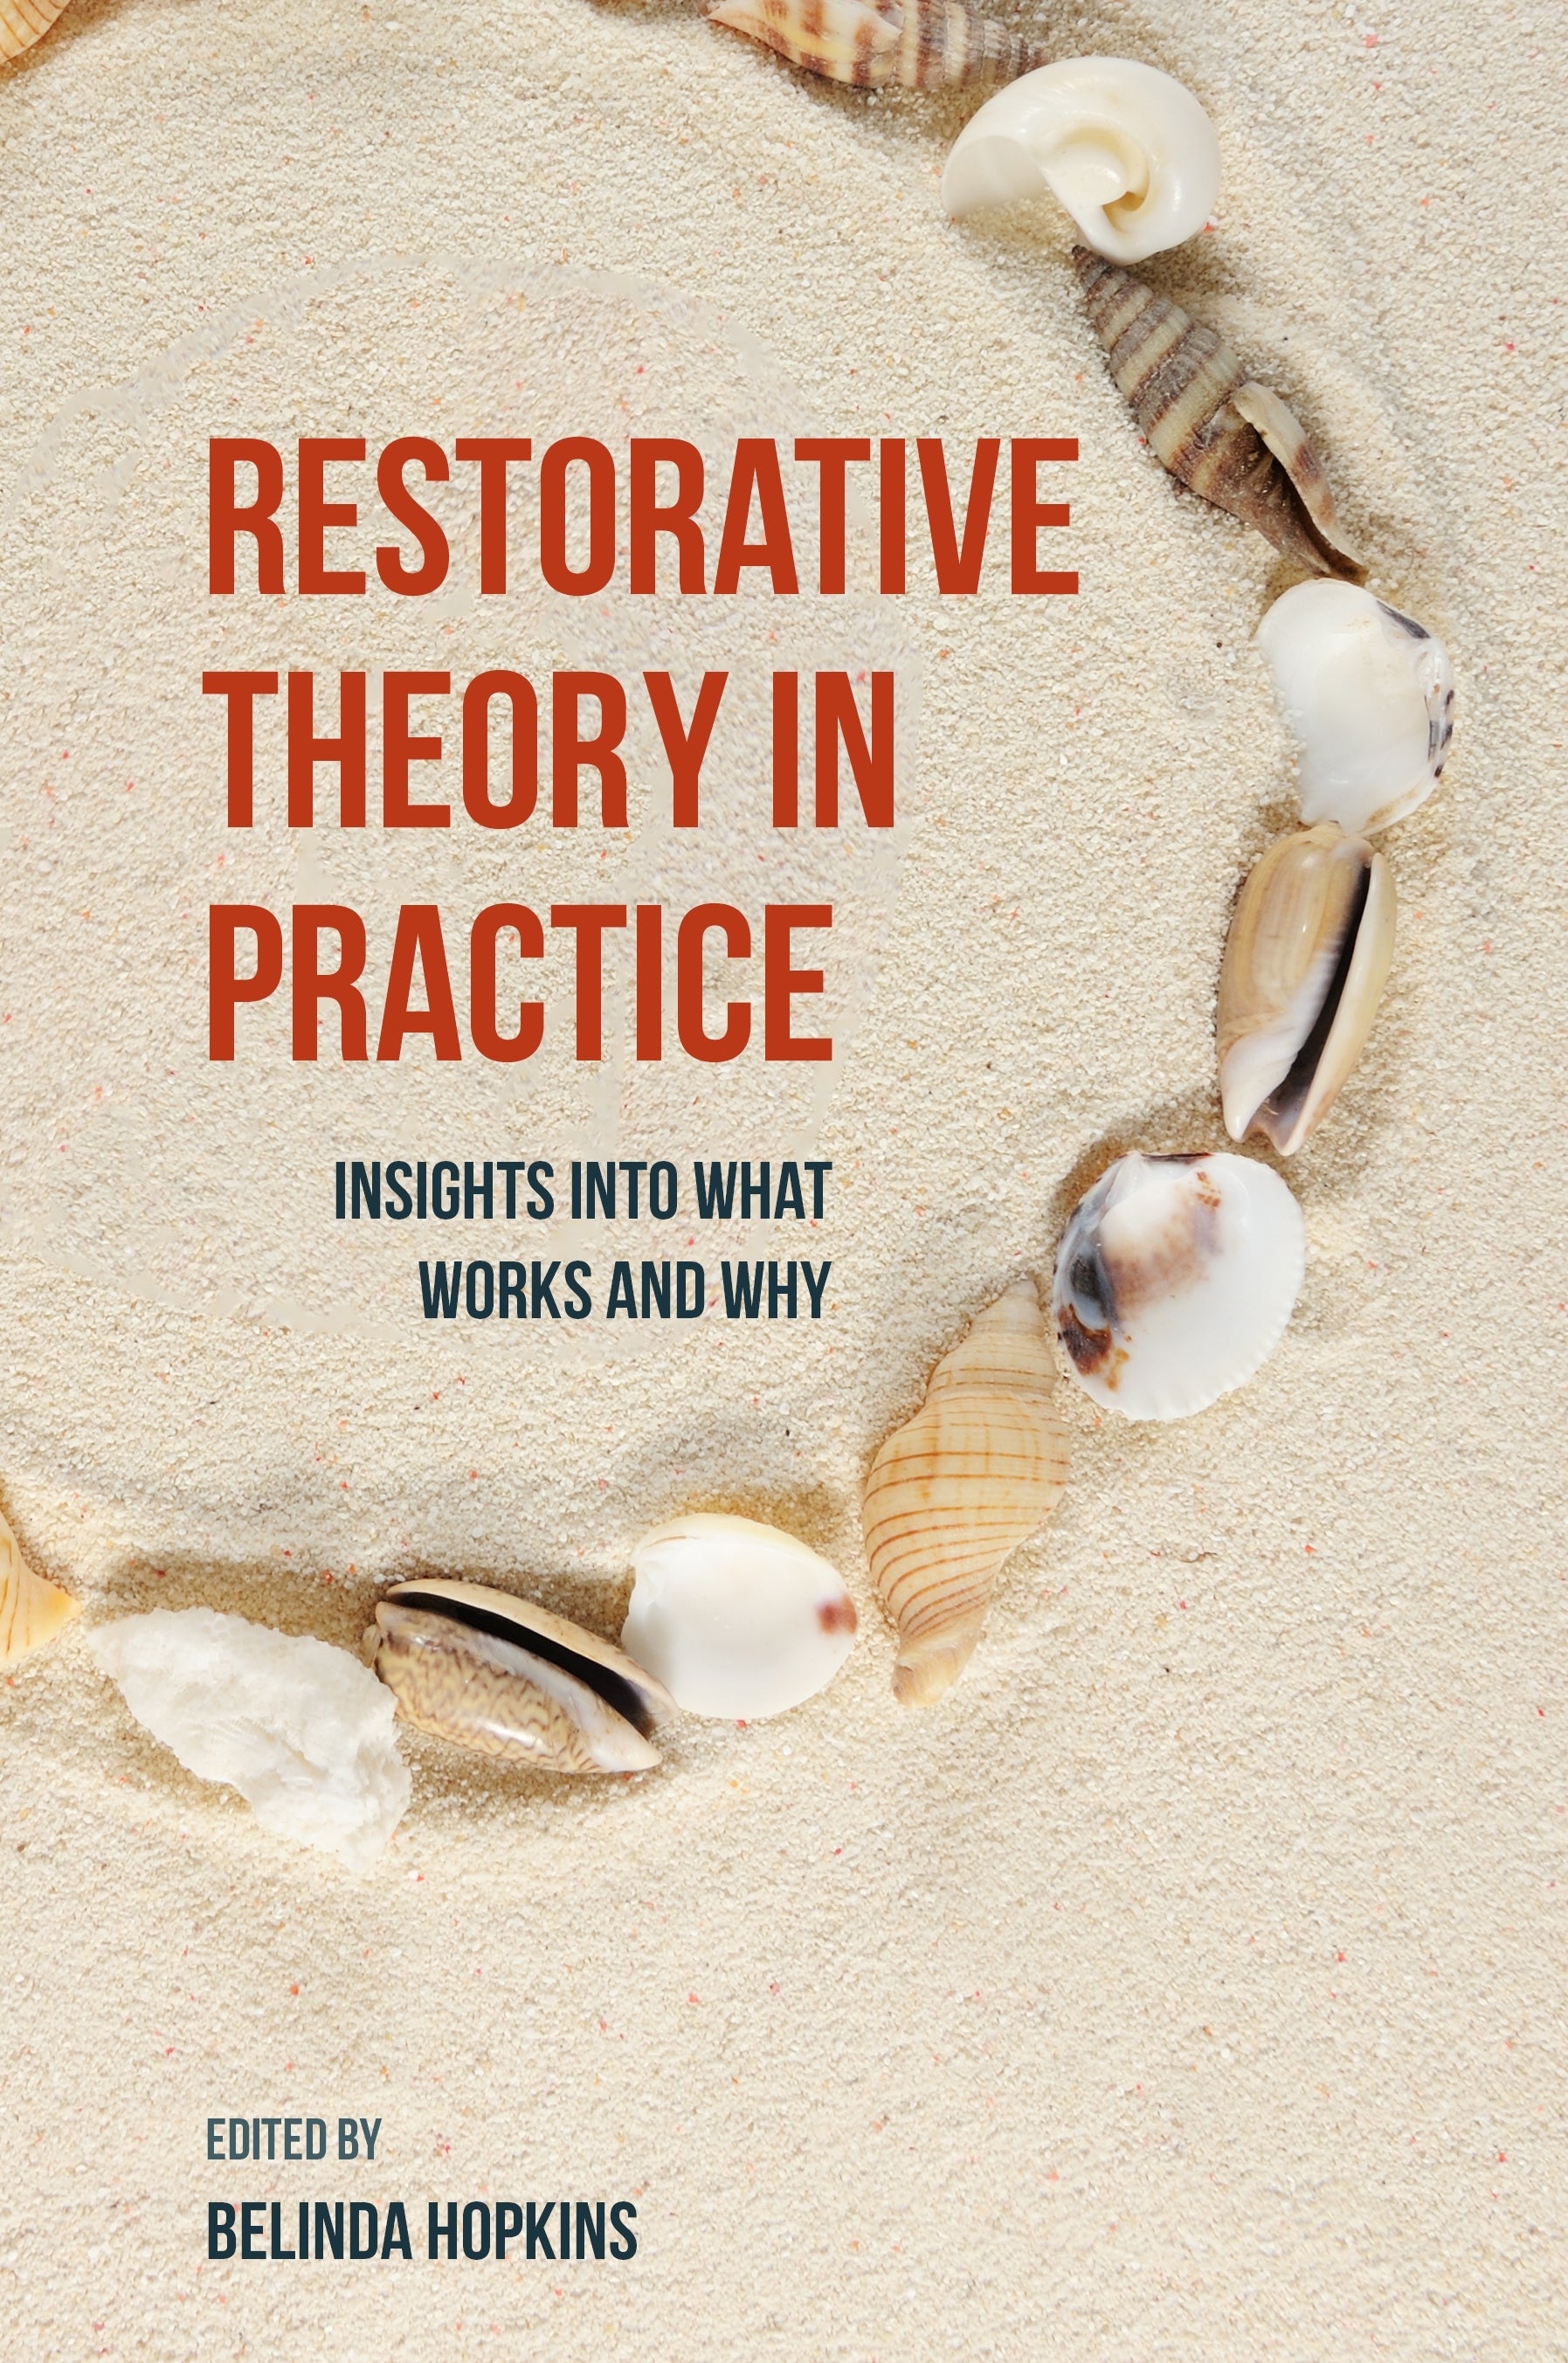 Restorative Theory in Practice by Belinda Hopkins